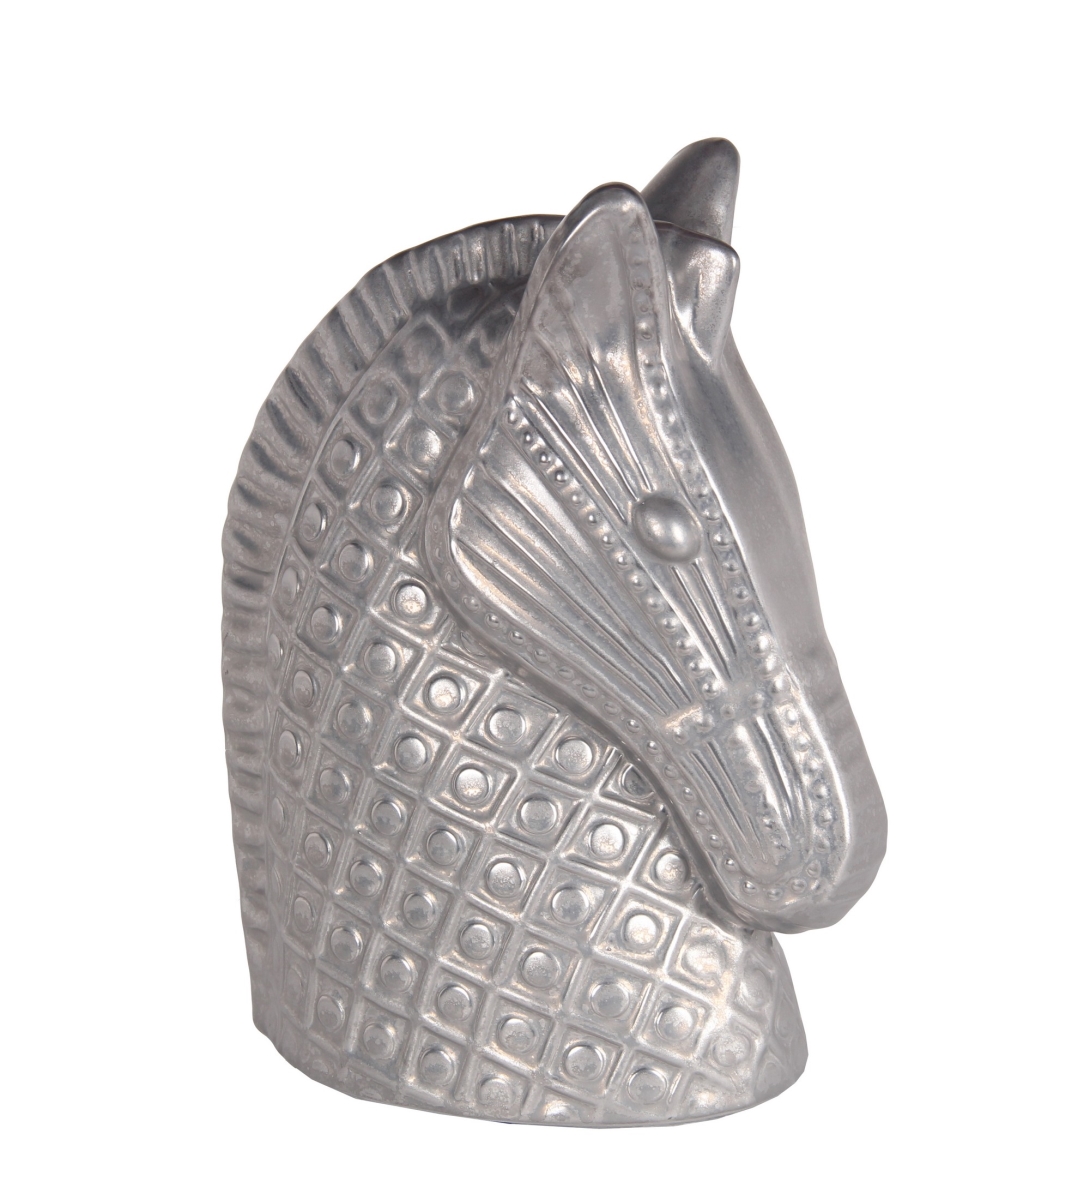 20377 10 X 5.5 X 13 In. Silver Geometric Ceramic Horse Decor - Large